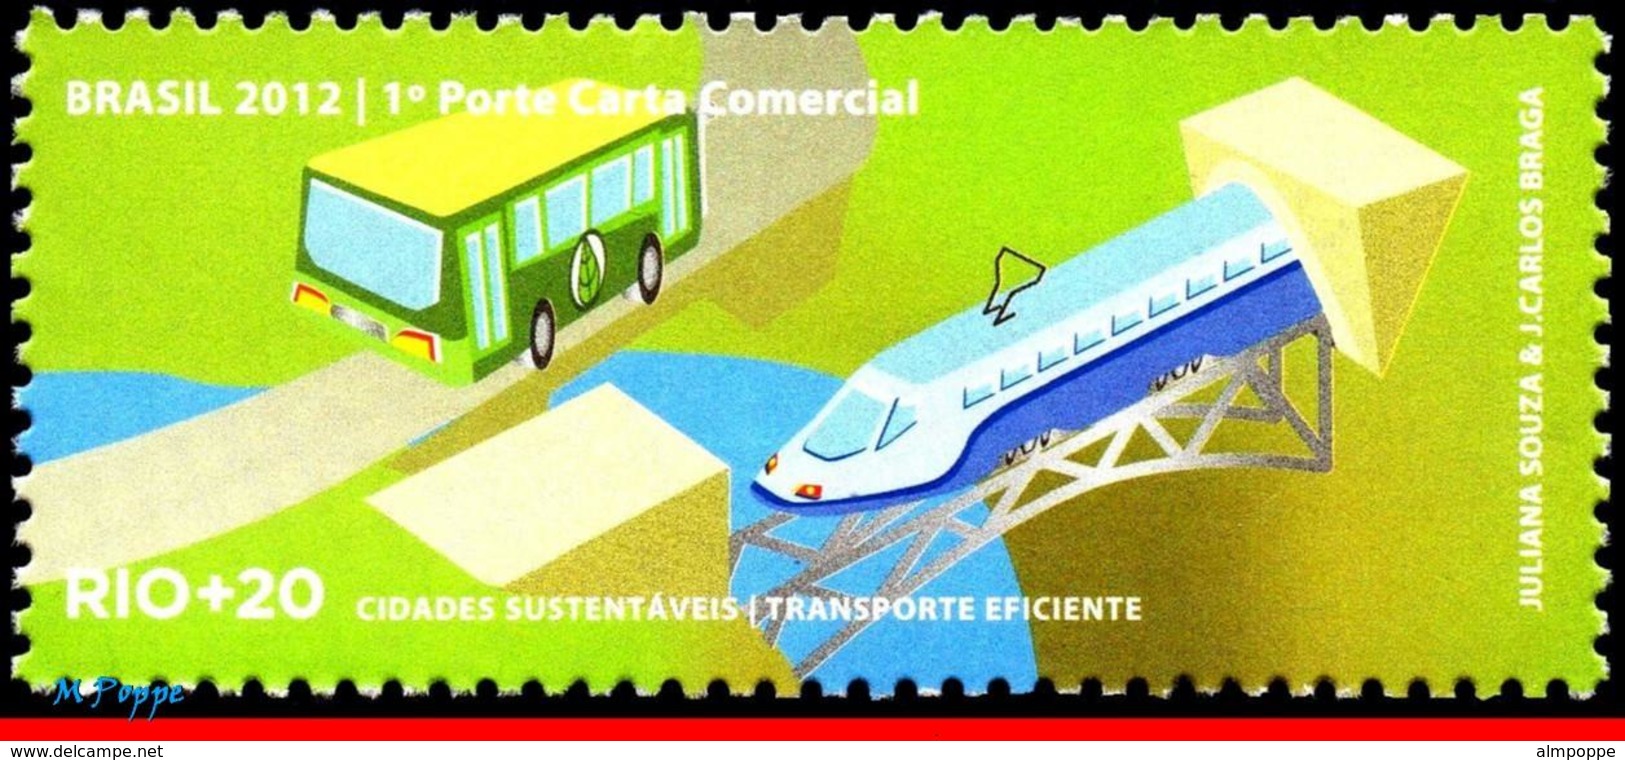 Ref. BR-3218O BRAZIL 2012 RAILWAYS, TRAINS, RIO+20, UN, EFFICIENT, TRANSPORTATION, TRAIN, BUS, MNH 1V Sc# 3218O - Environment & Climate Protection